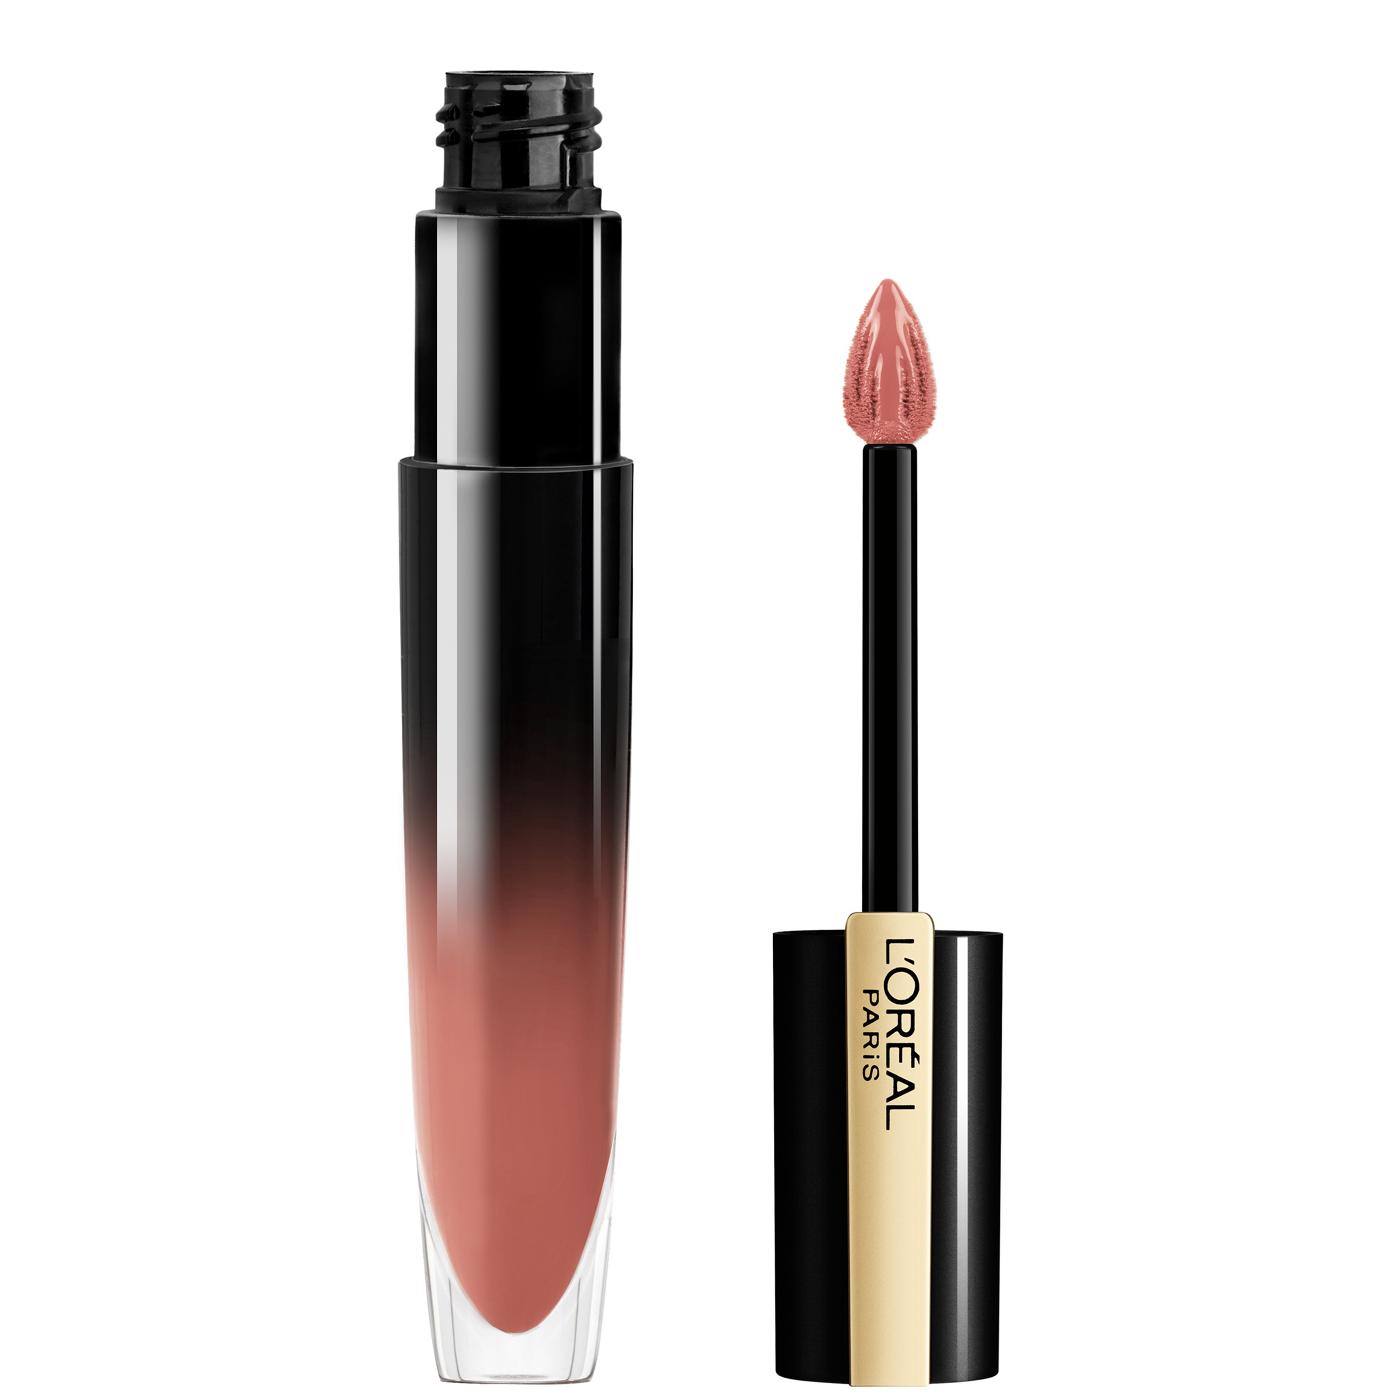 L'Oréal Paris Brilliant Signature Shiny Lip Stain Lipstick with precision applicator Be Uncontrollable; image 1 of 2